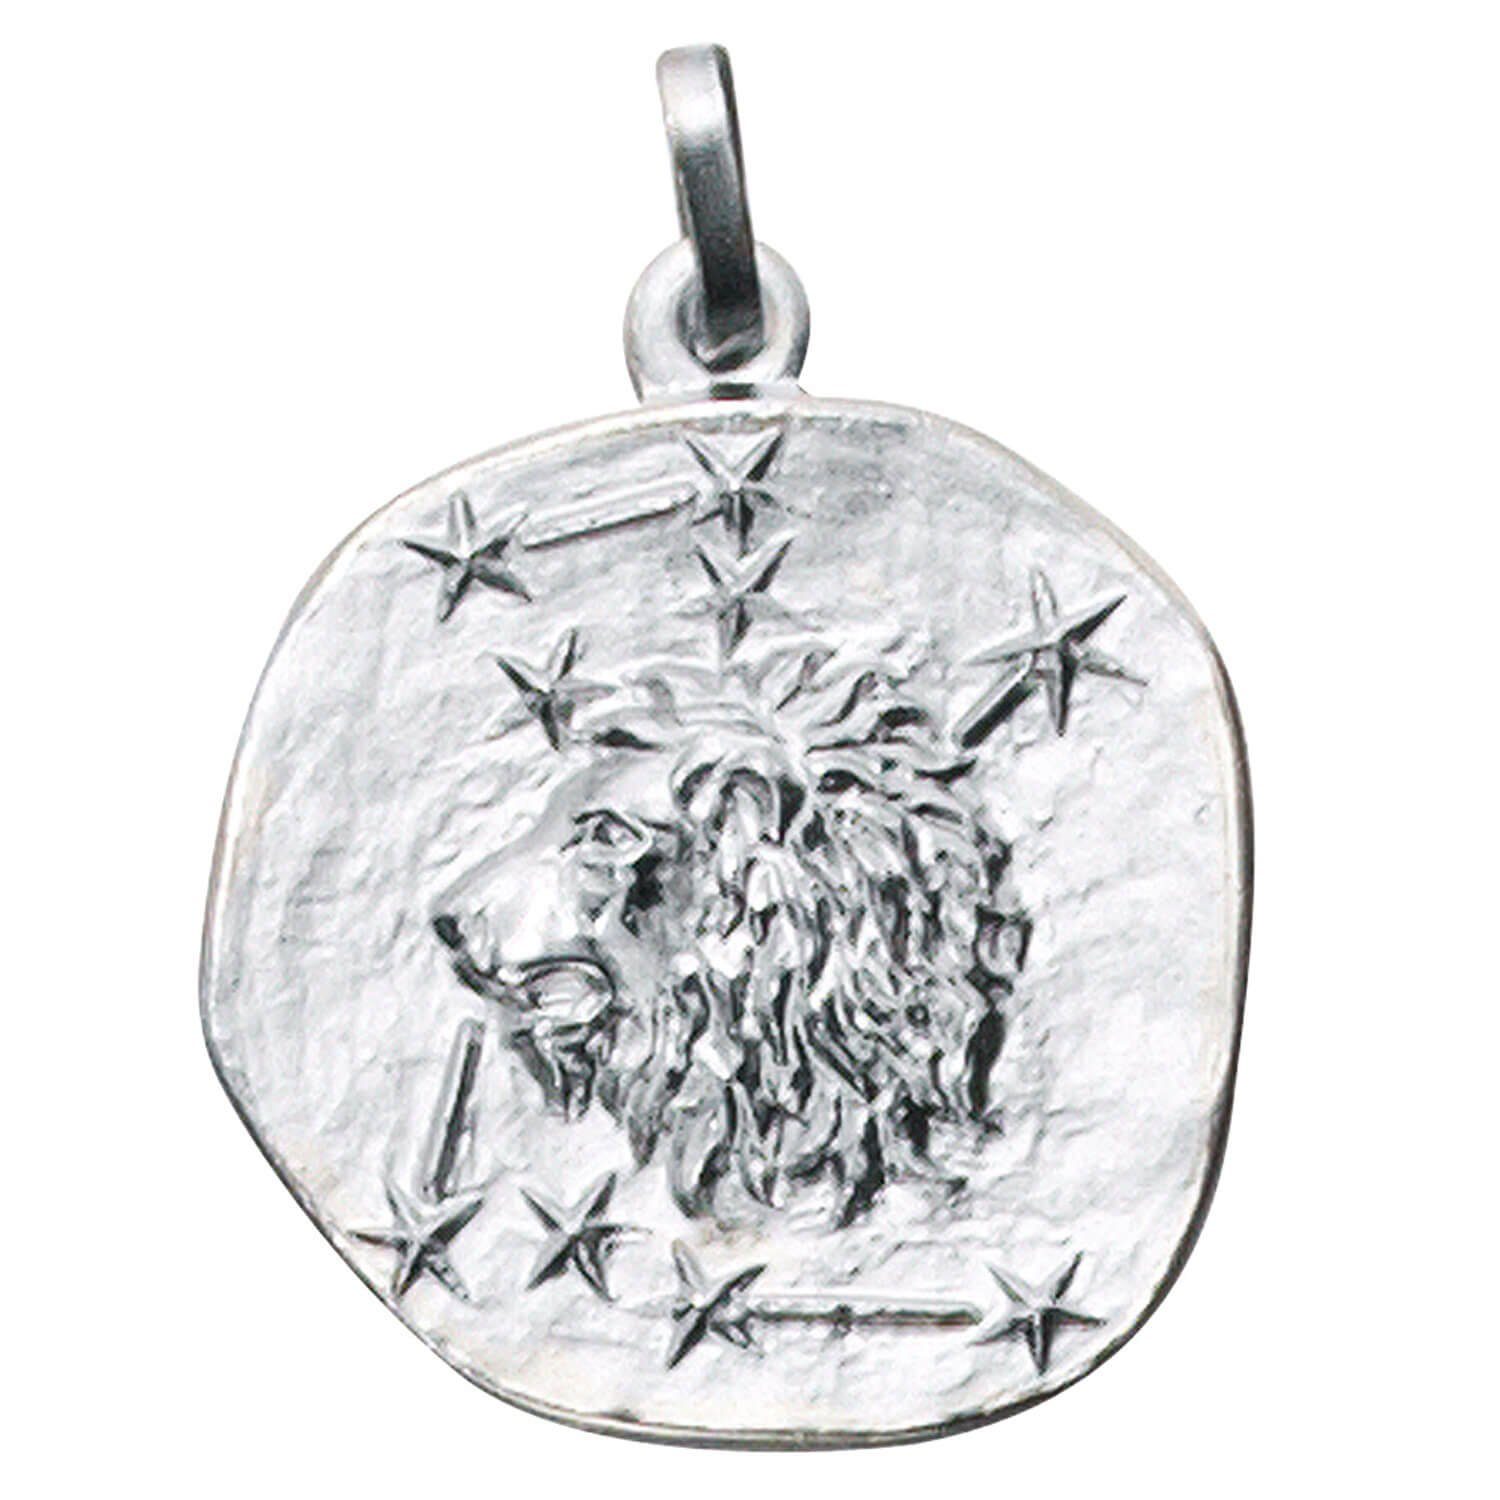 Silber Kettenanhänger Löwe Krone aus 925 925 Sterlingsilber Anhänger Echt - Sternzeichen Silber Schmuck Halsschmuck,